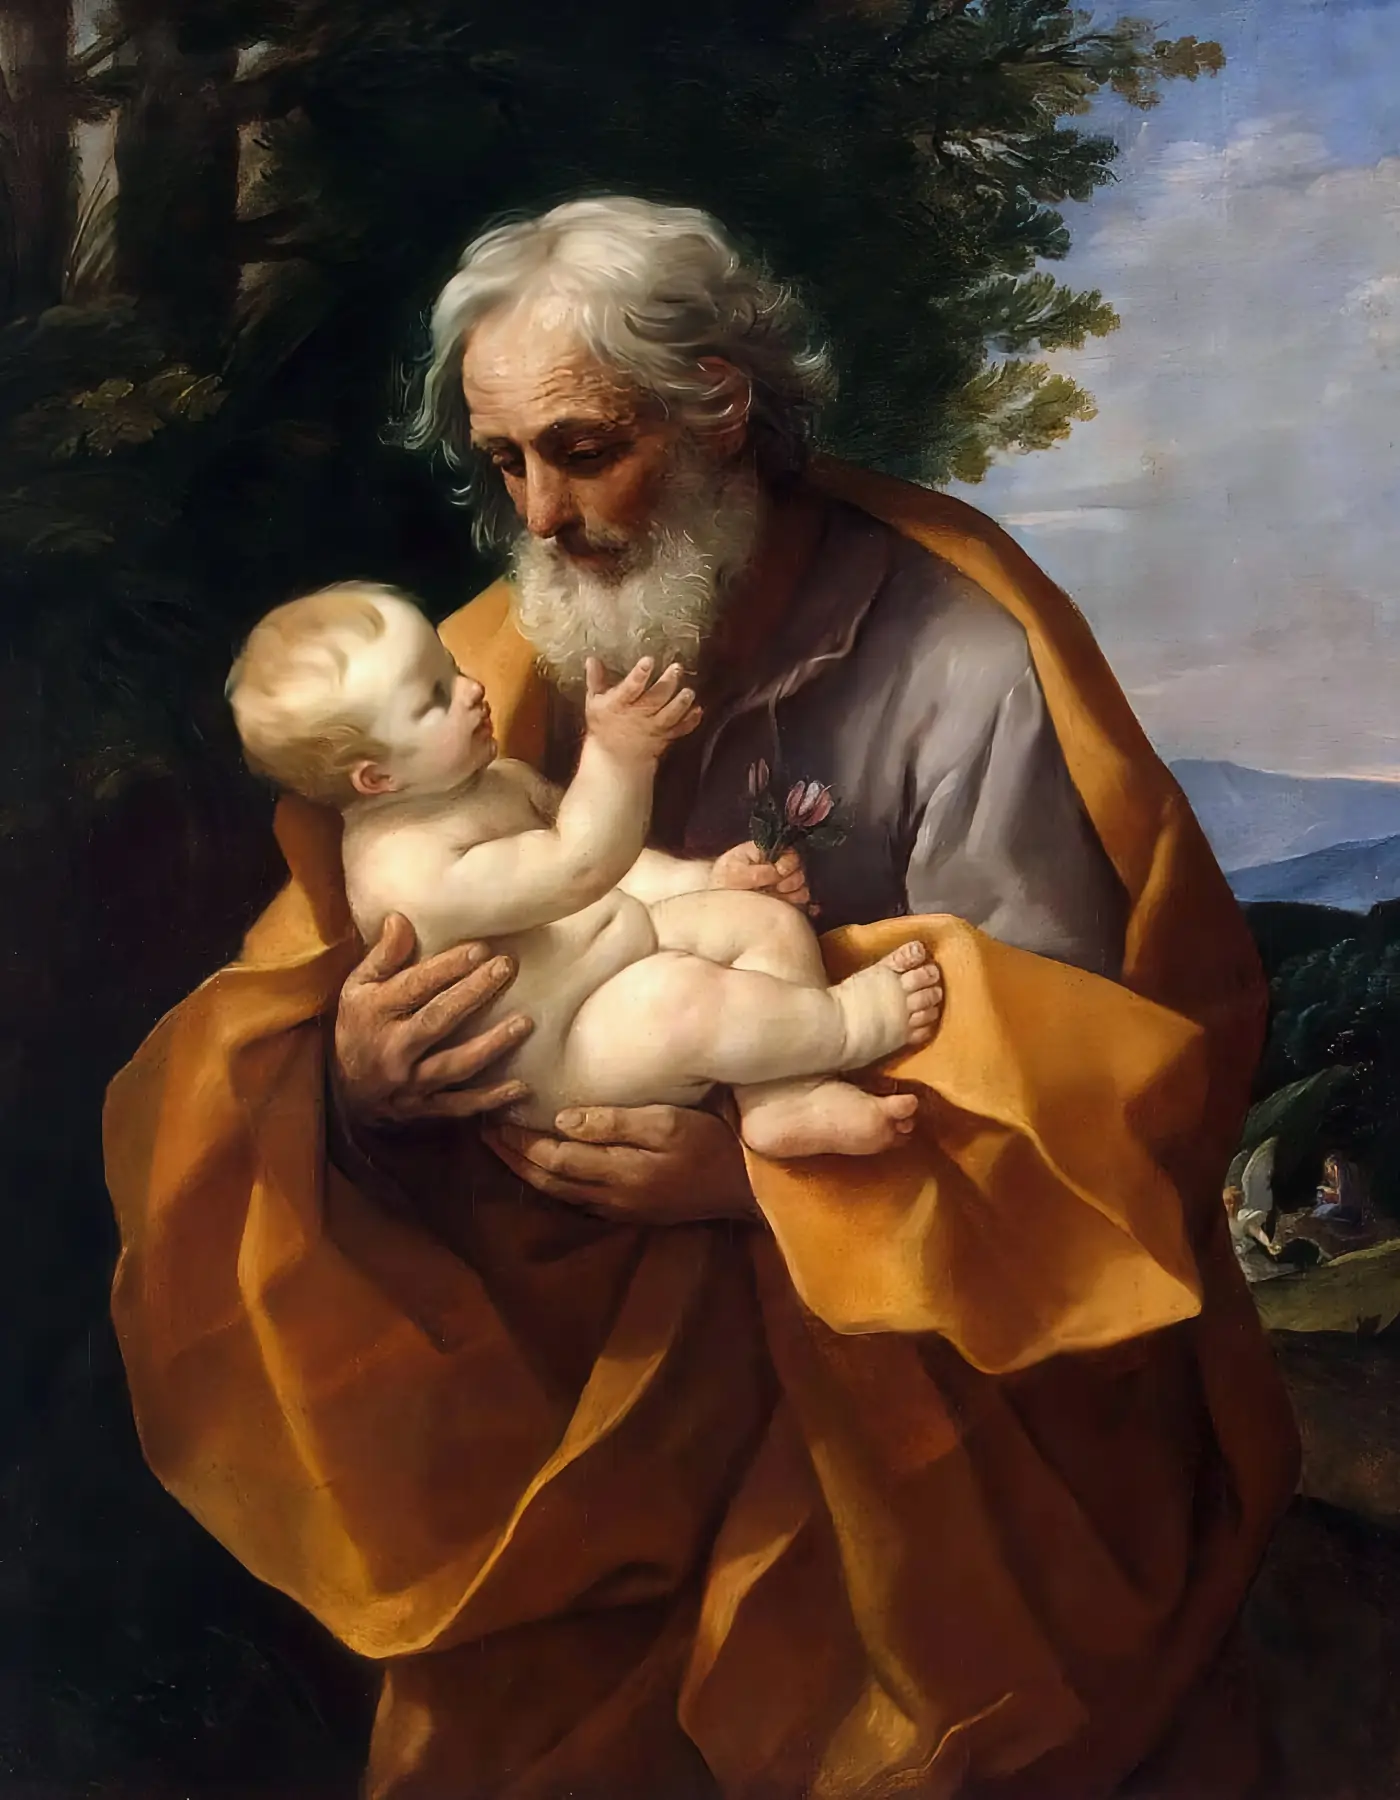 An image of St. Joseph holding baby Jesus lovingly